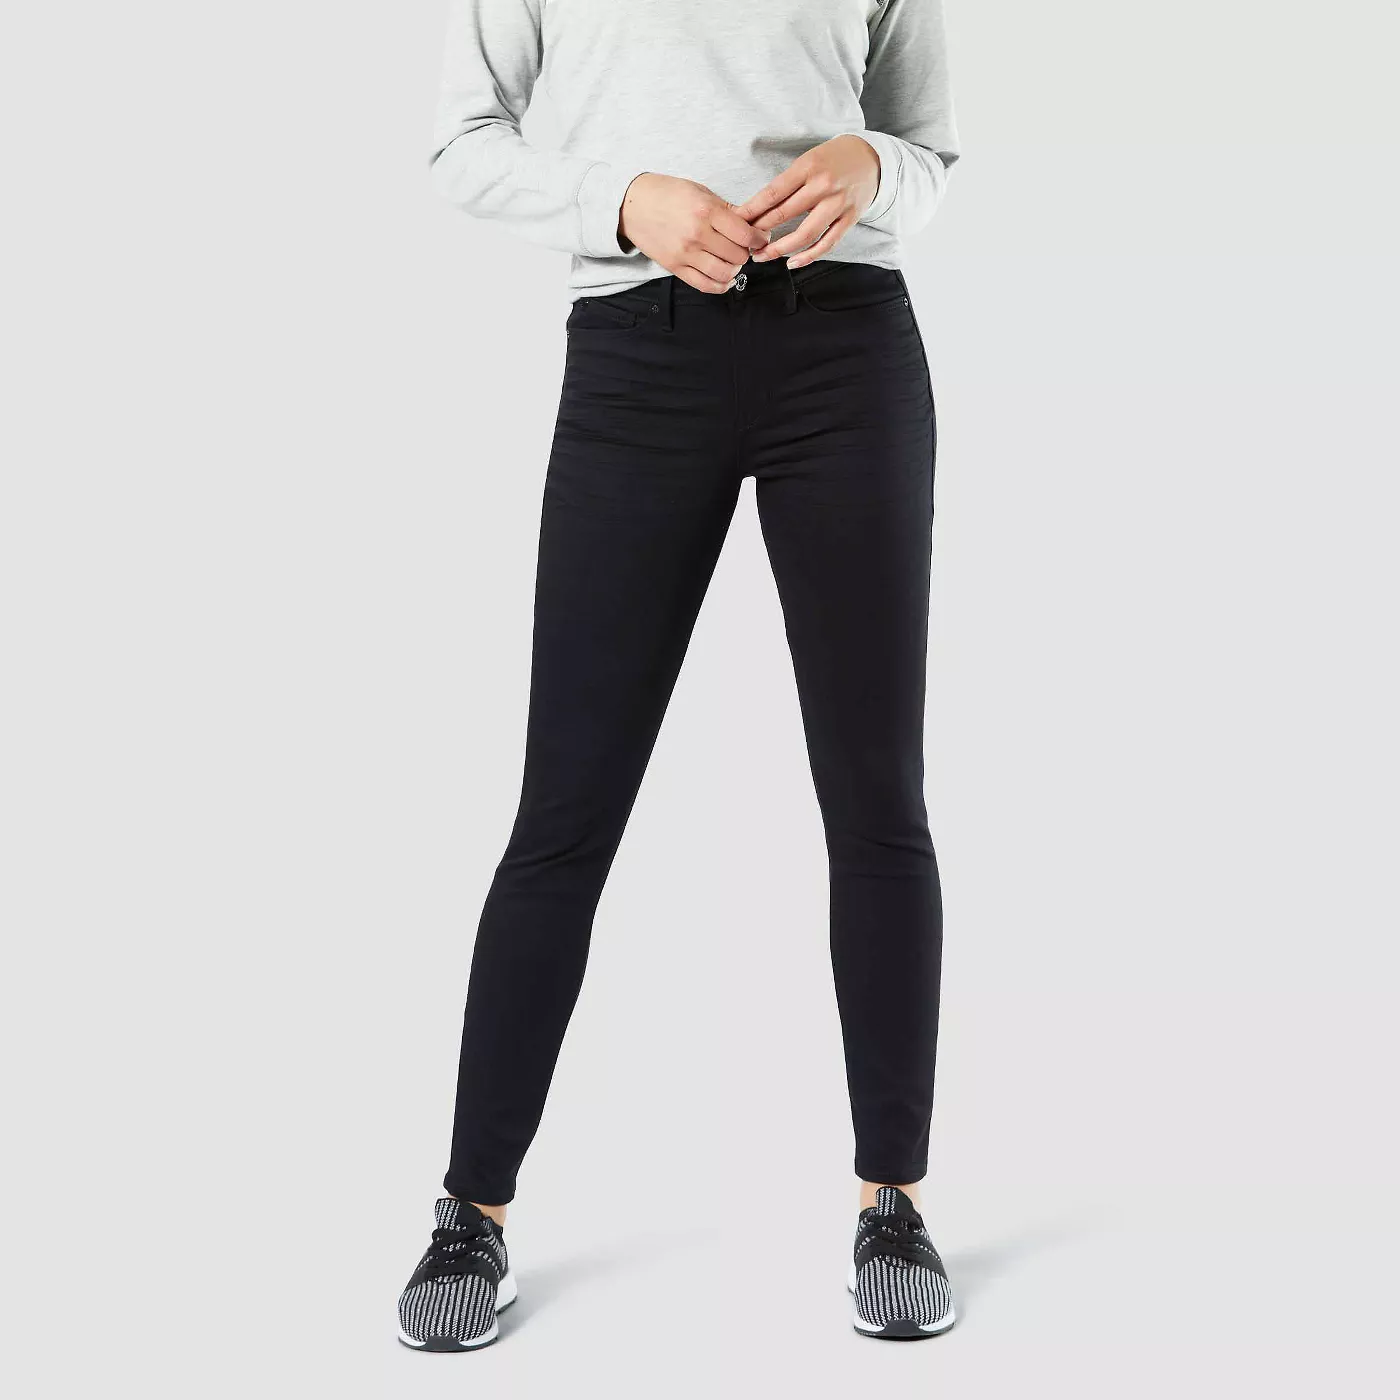 DENIZEN® from Levi's® Women's High-Rise Skinny Jeans - image 1 of 3